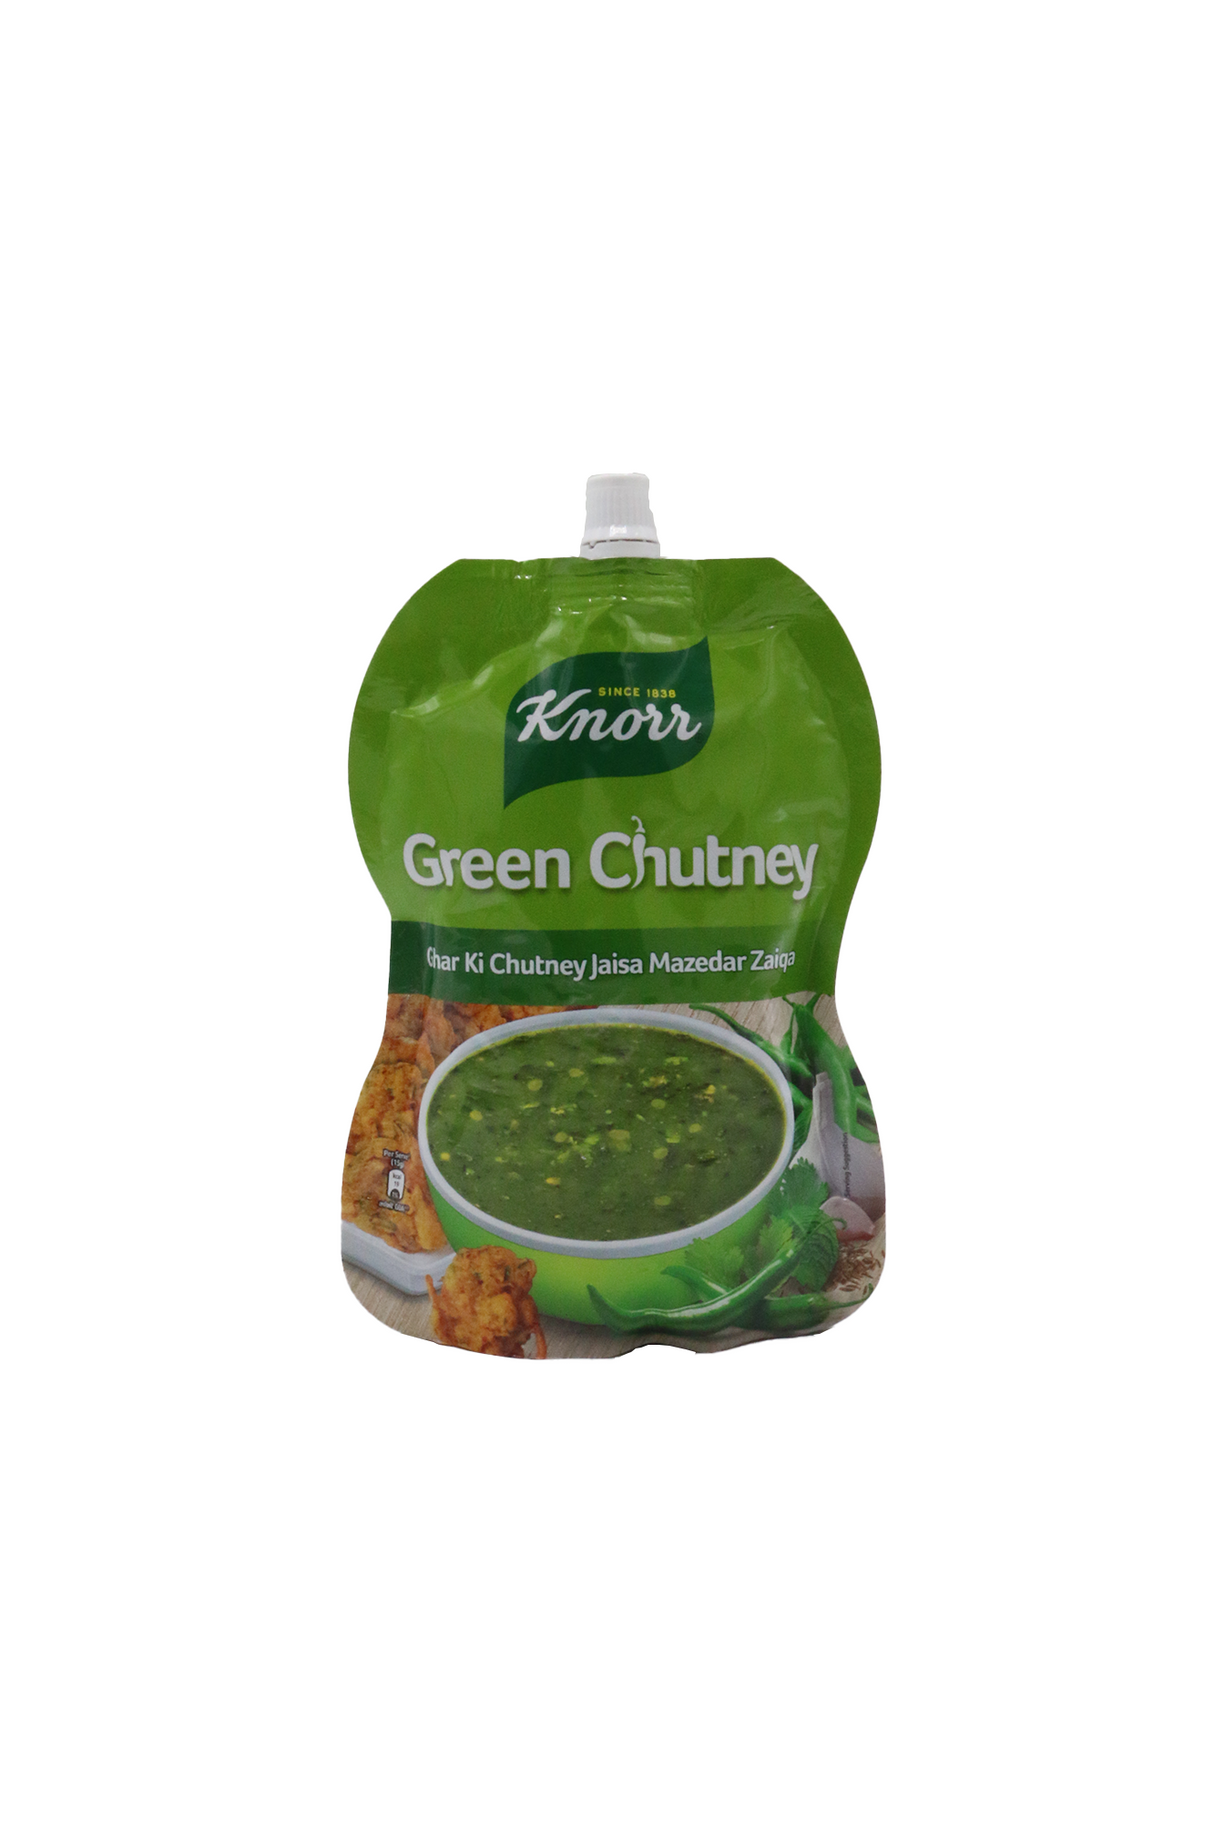 knorr green chutney 400g